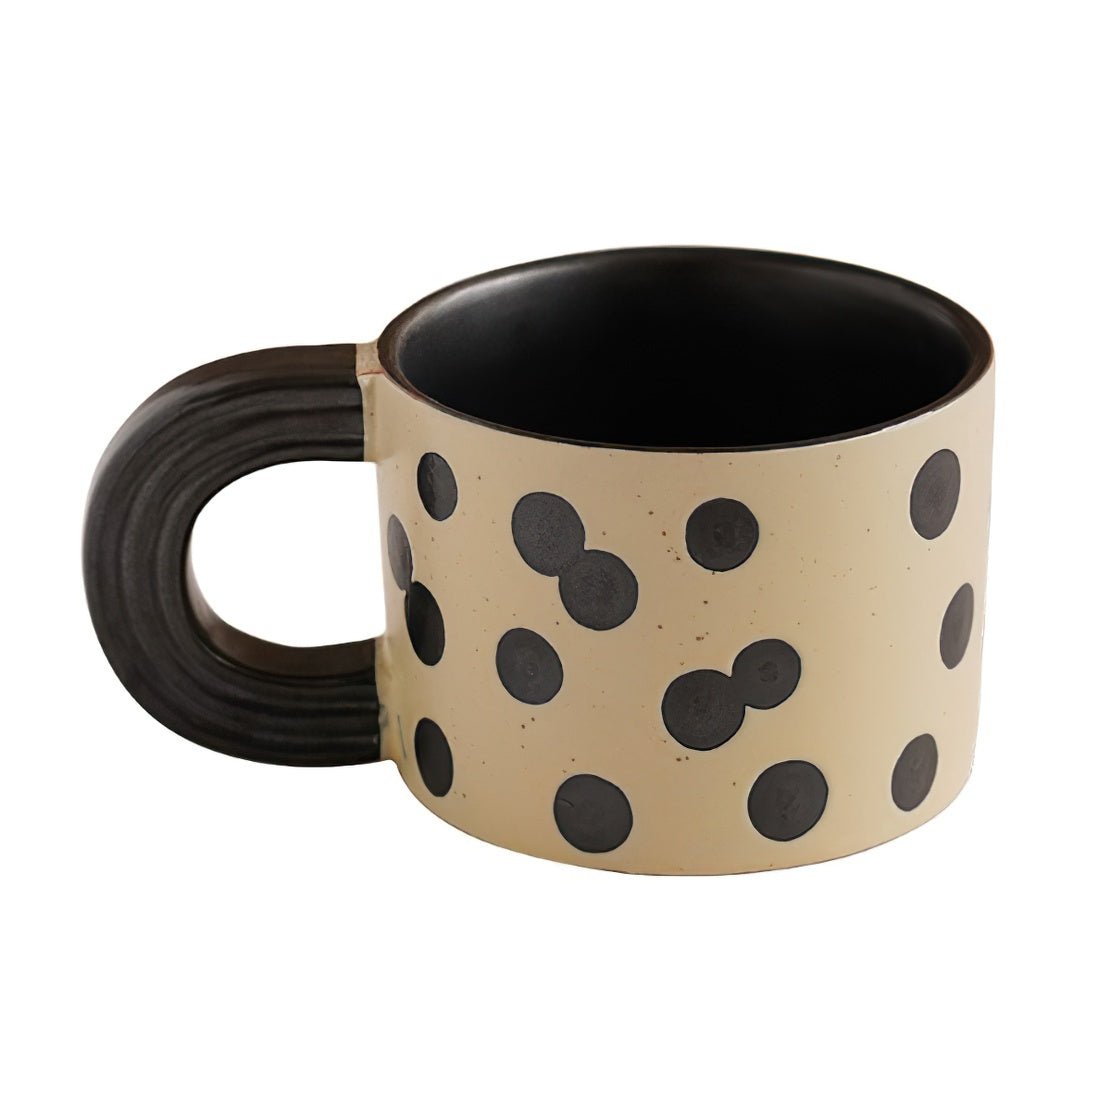 White & black ceramic polka dot mug